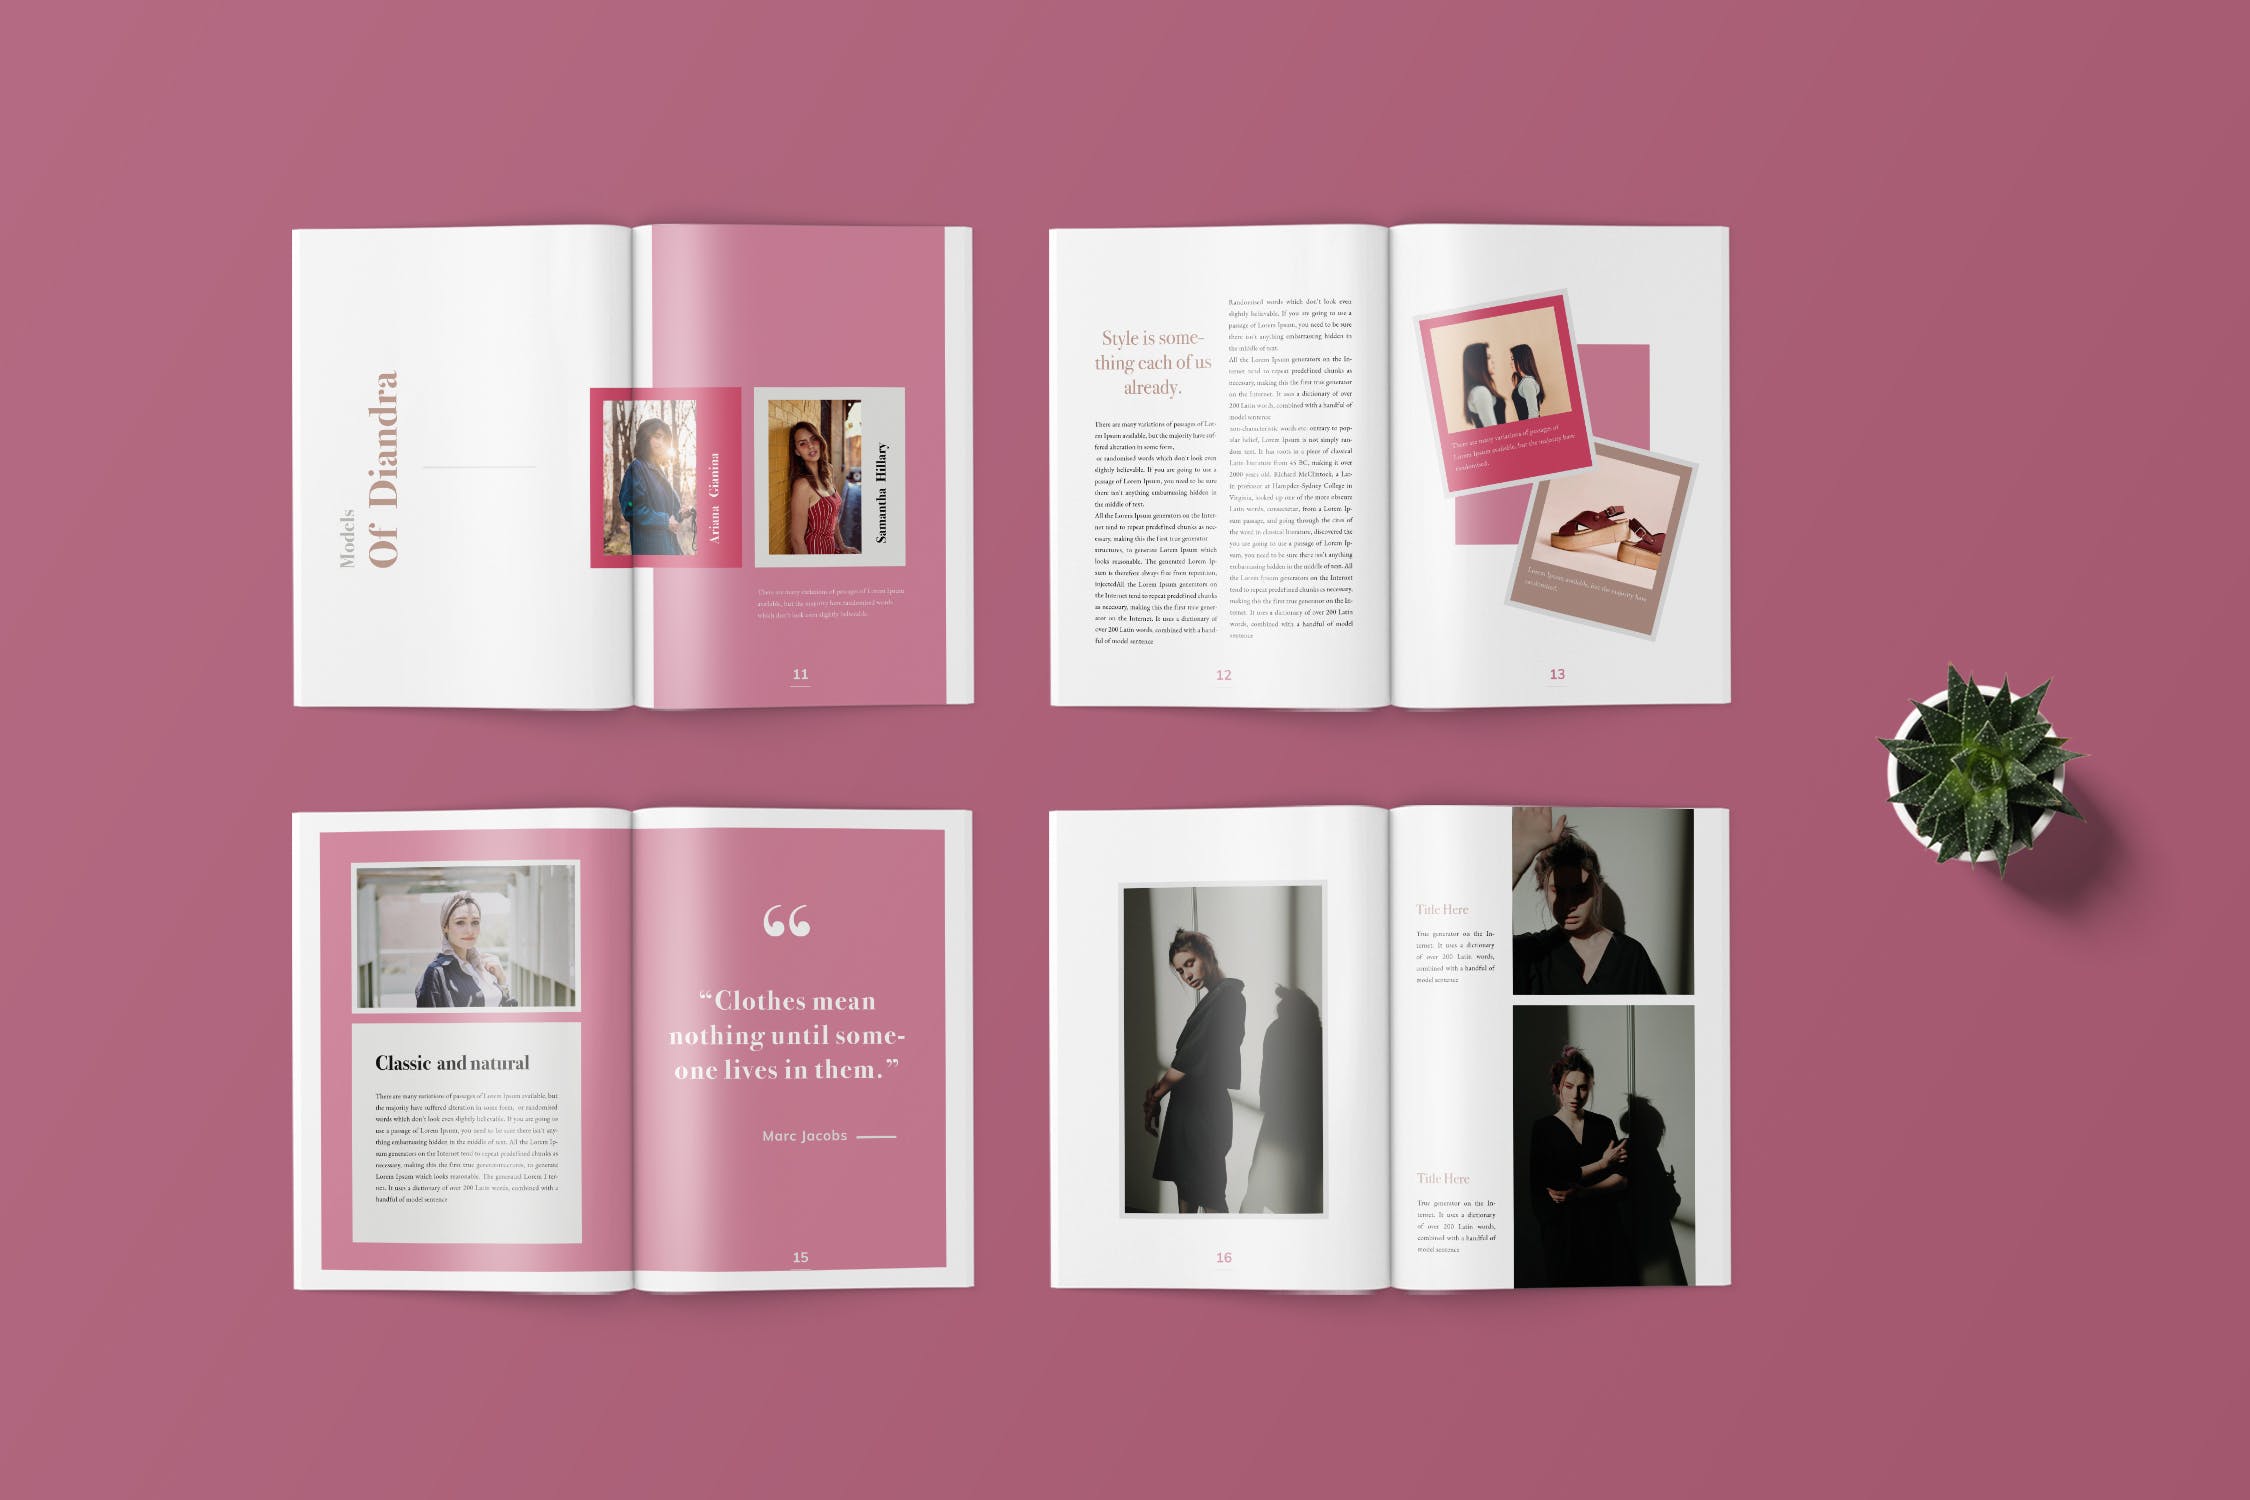 时装画册产品目录Lookbook排版设计INDD模板 Fashion Lookbook Catalogue插图(3)